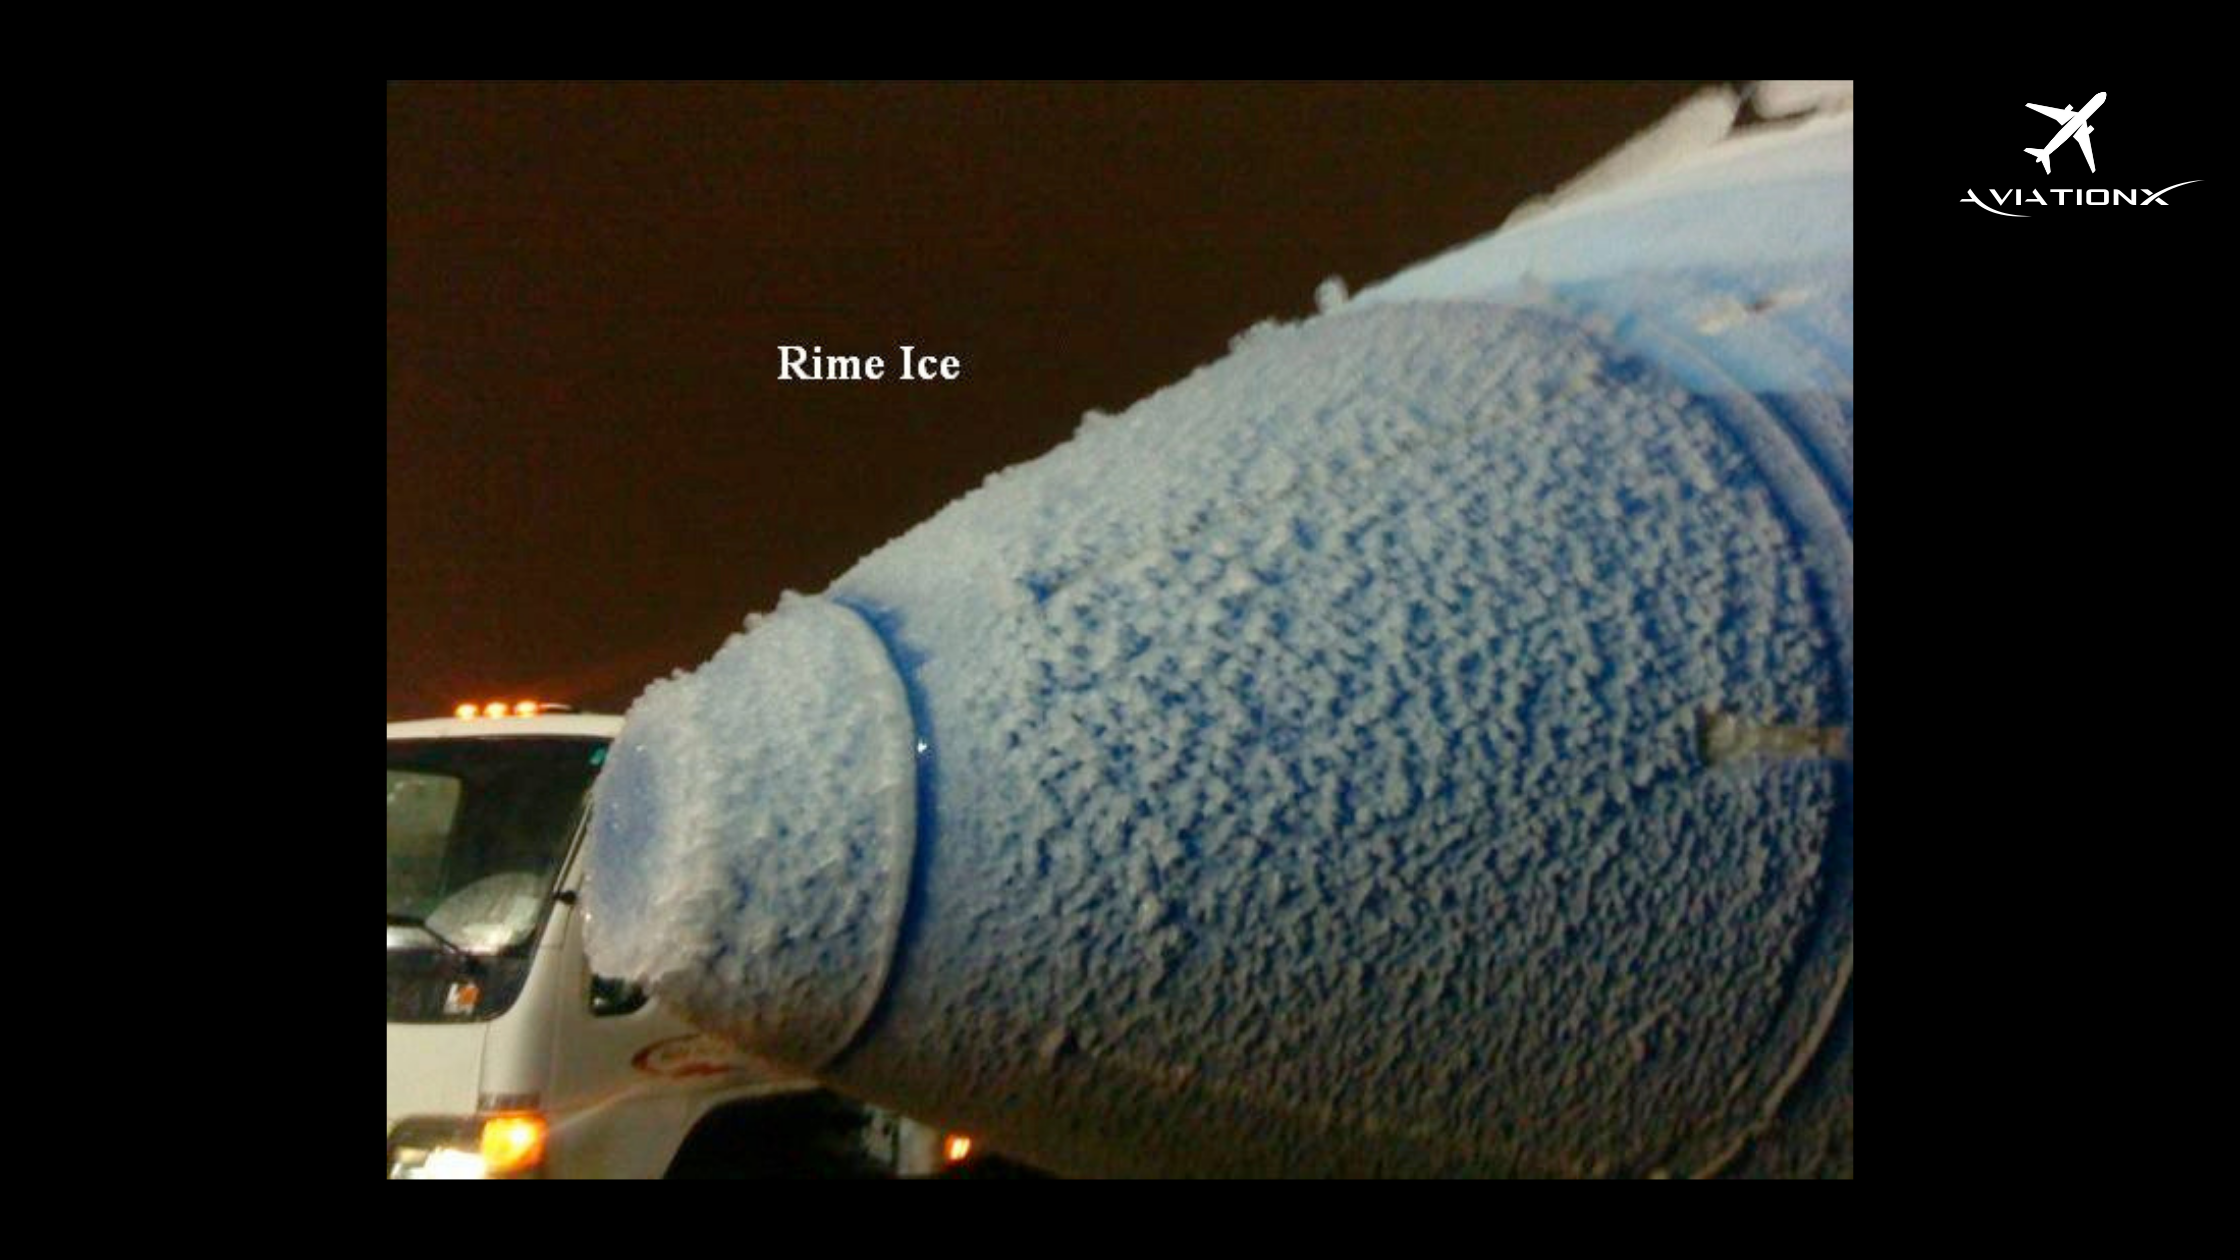 Decoding Aviation Meteorology: Understanding Ice Accretion